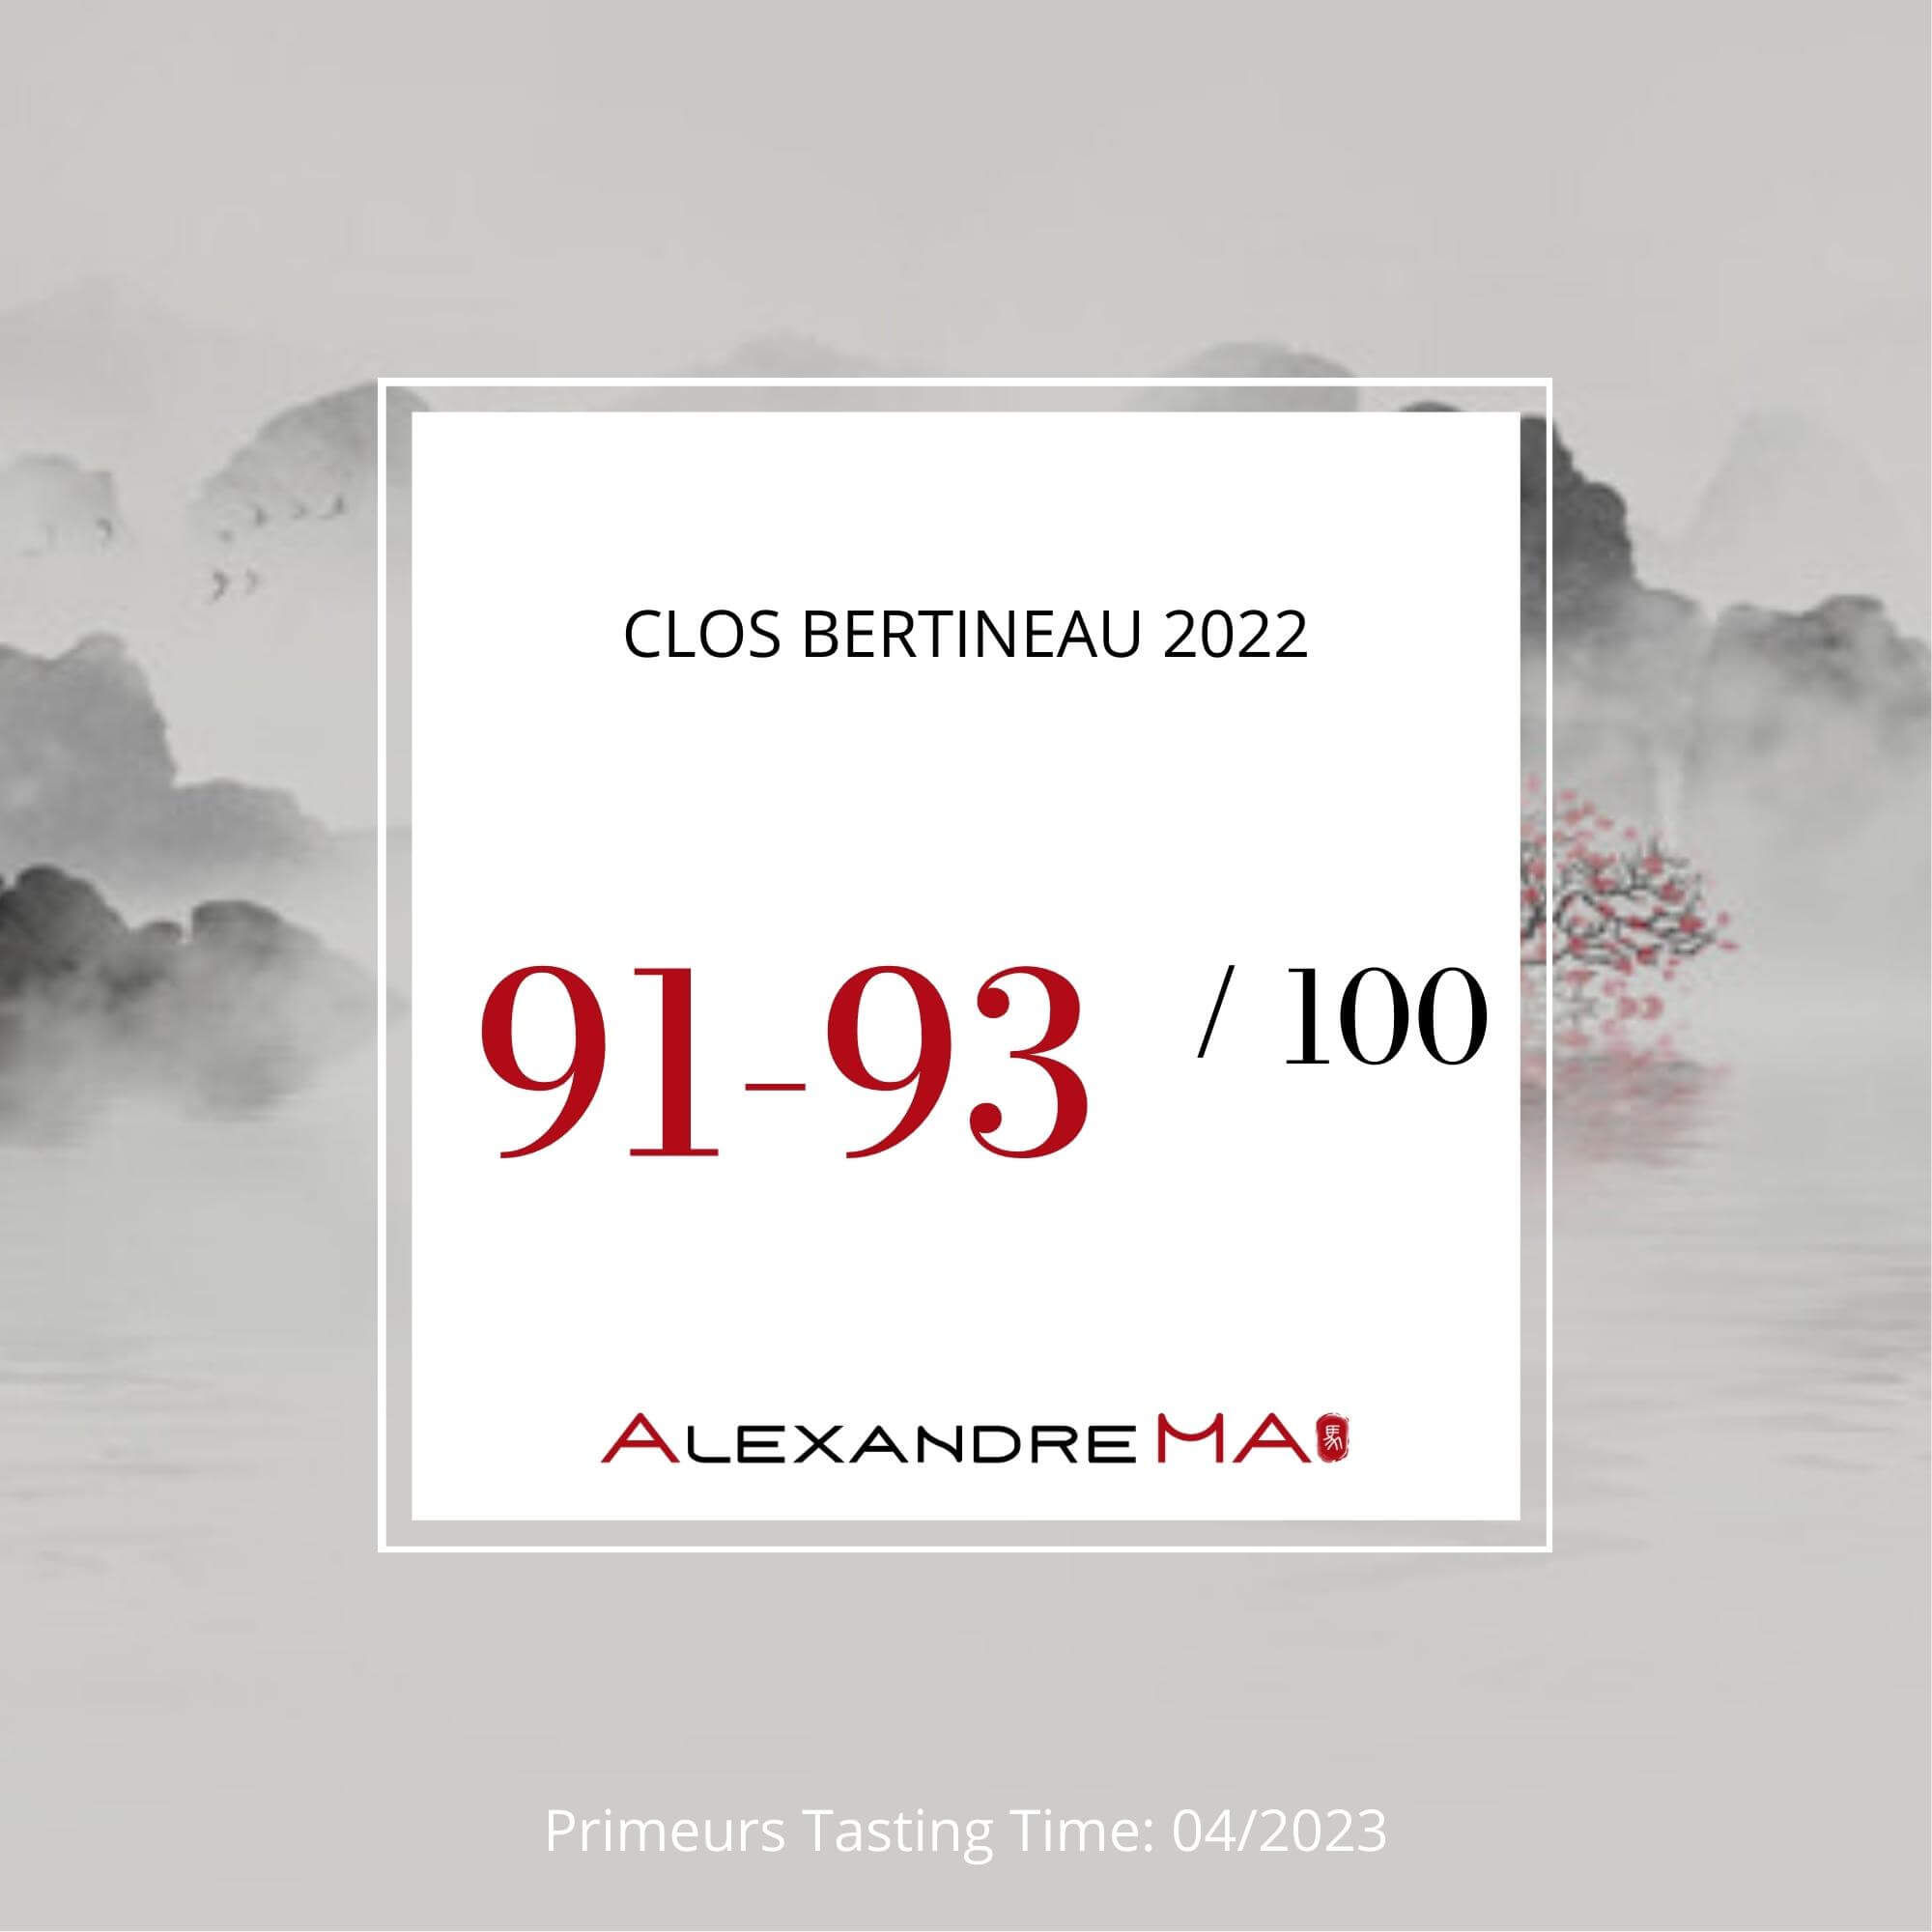 Clos Bertineau 2022 Primeurs - Alexandre MA